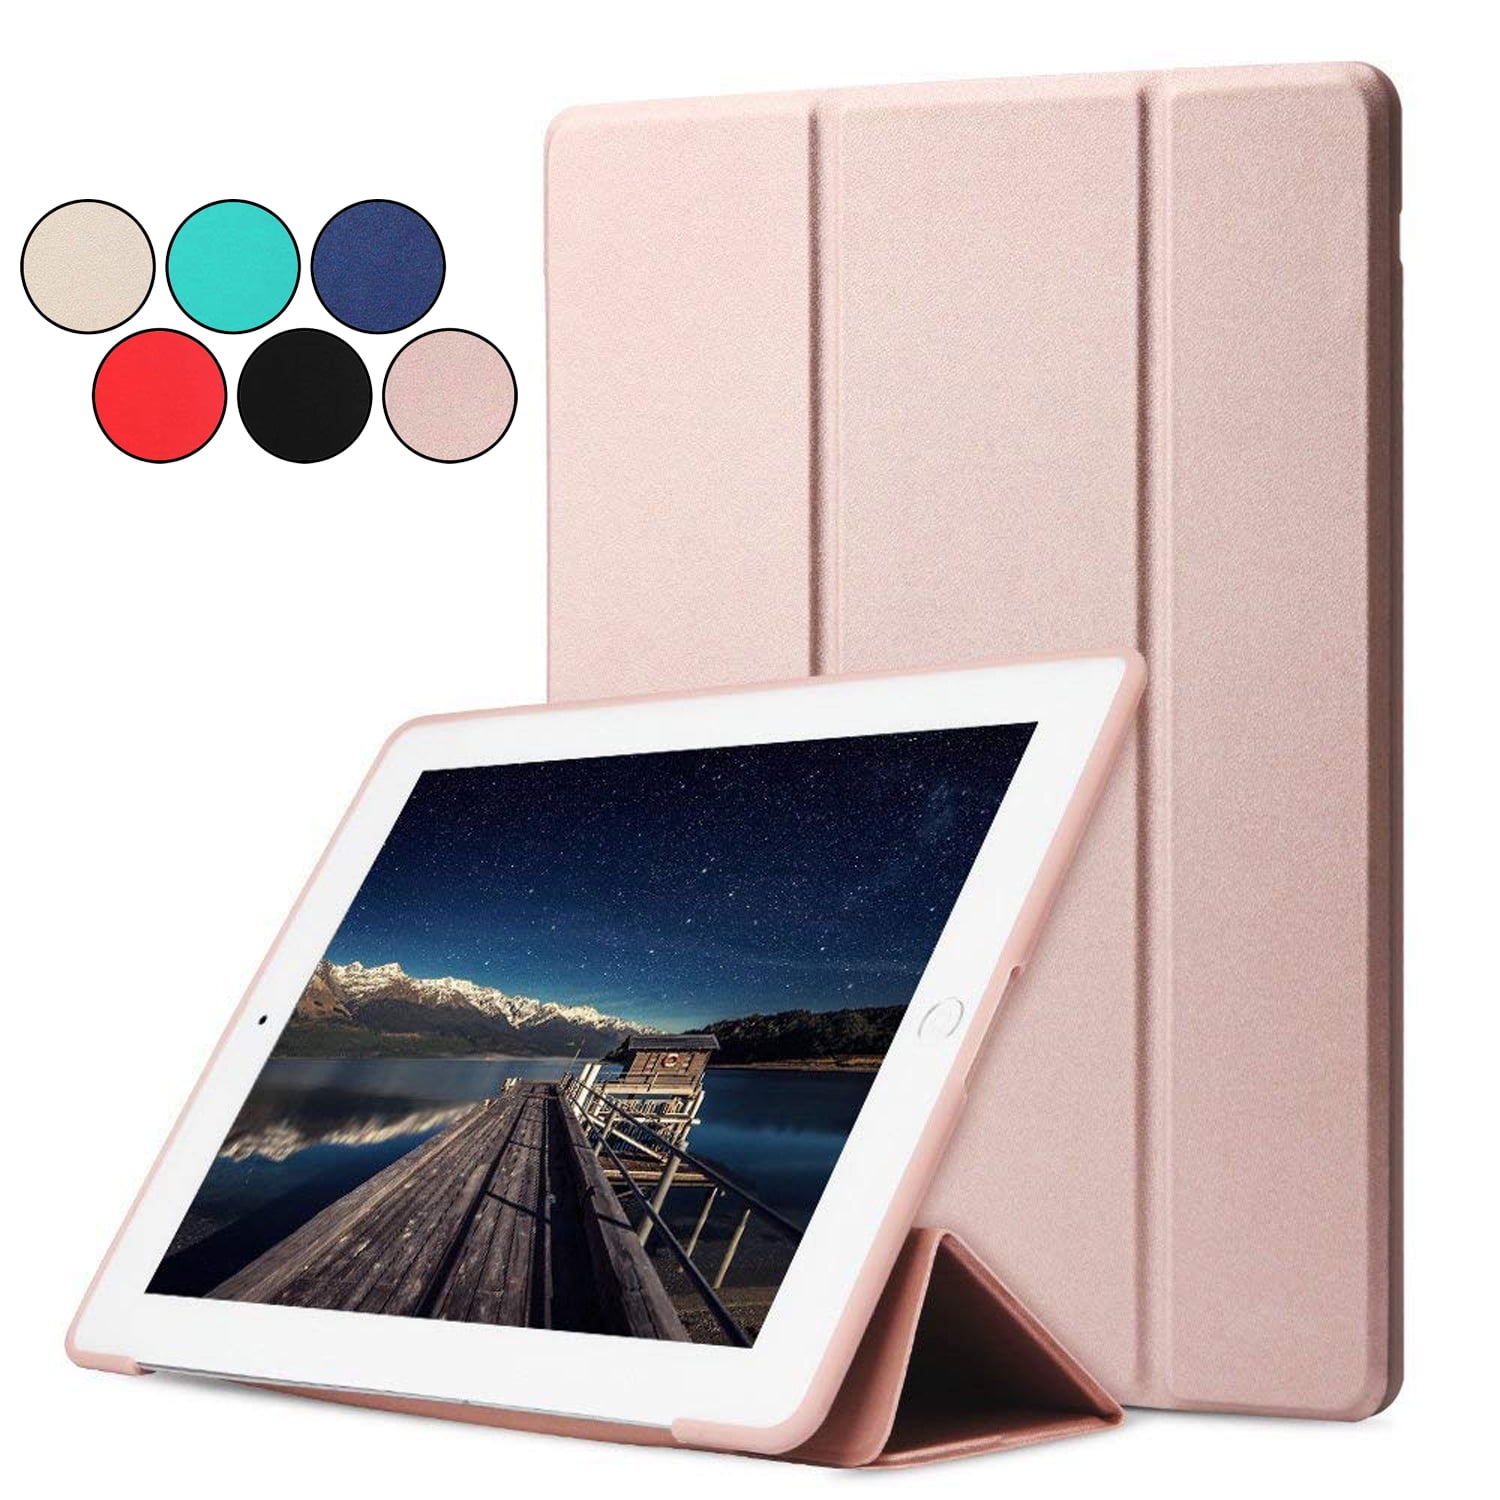 Orange Fruit iPad Case Mini 6 8.3 Pro 11 2021 Pro 12.9 In 2021 Mini 5 7.9 In Pro 12.9 10.2 Inch Air 4 10.9 Inch 2020 Custom Mini 4 7.9 In